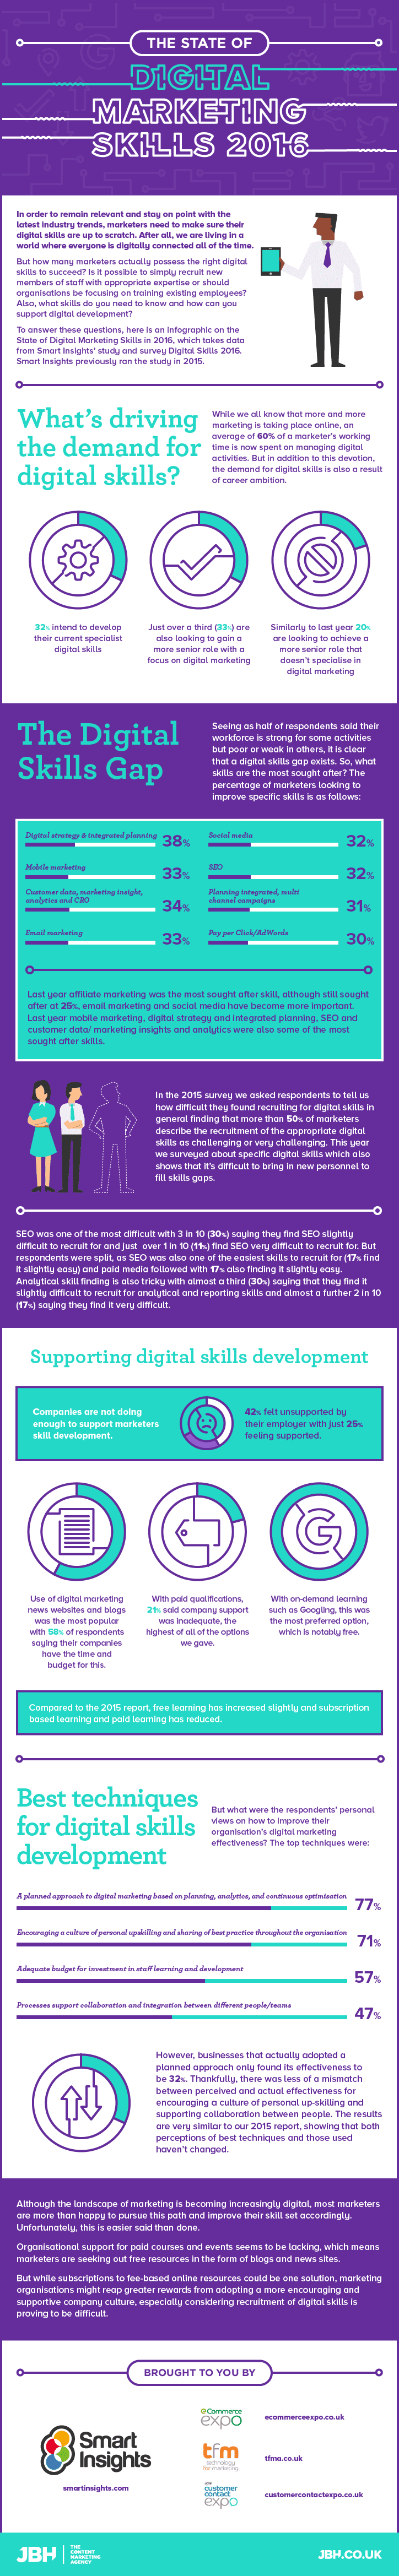 Digital Skills Infographic state of digital marketing skills 2016